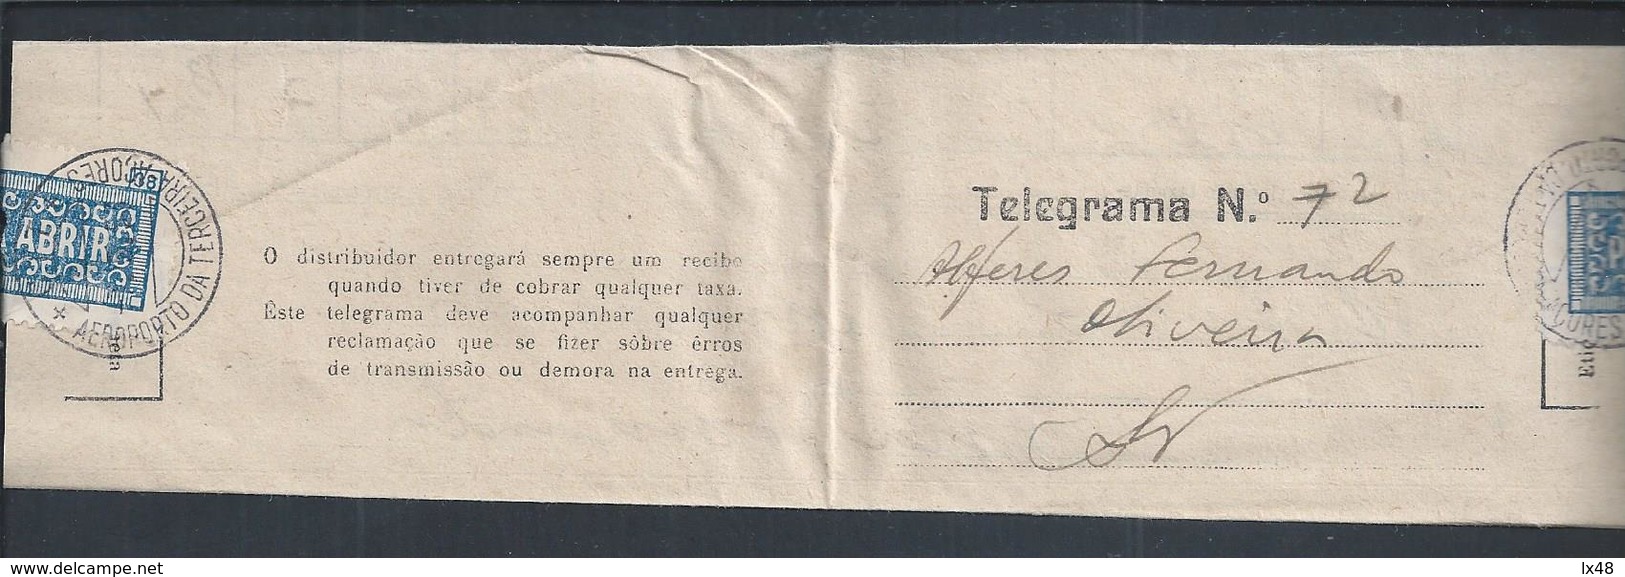 Telegrama Ref. 72 De 1945, Obliterado No Aeroporto De Terceira, Açores 1953. Telegram Obliterated In Airport Of Açores - Covers & Documents